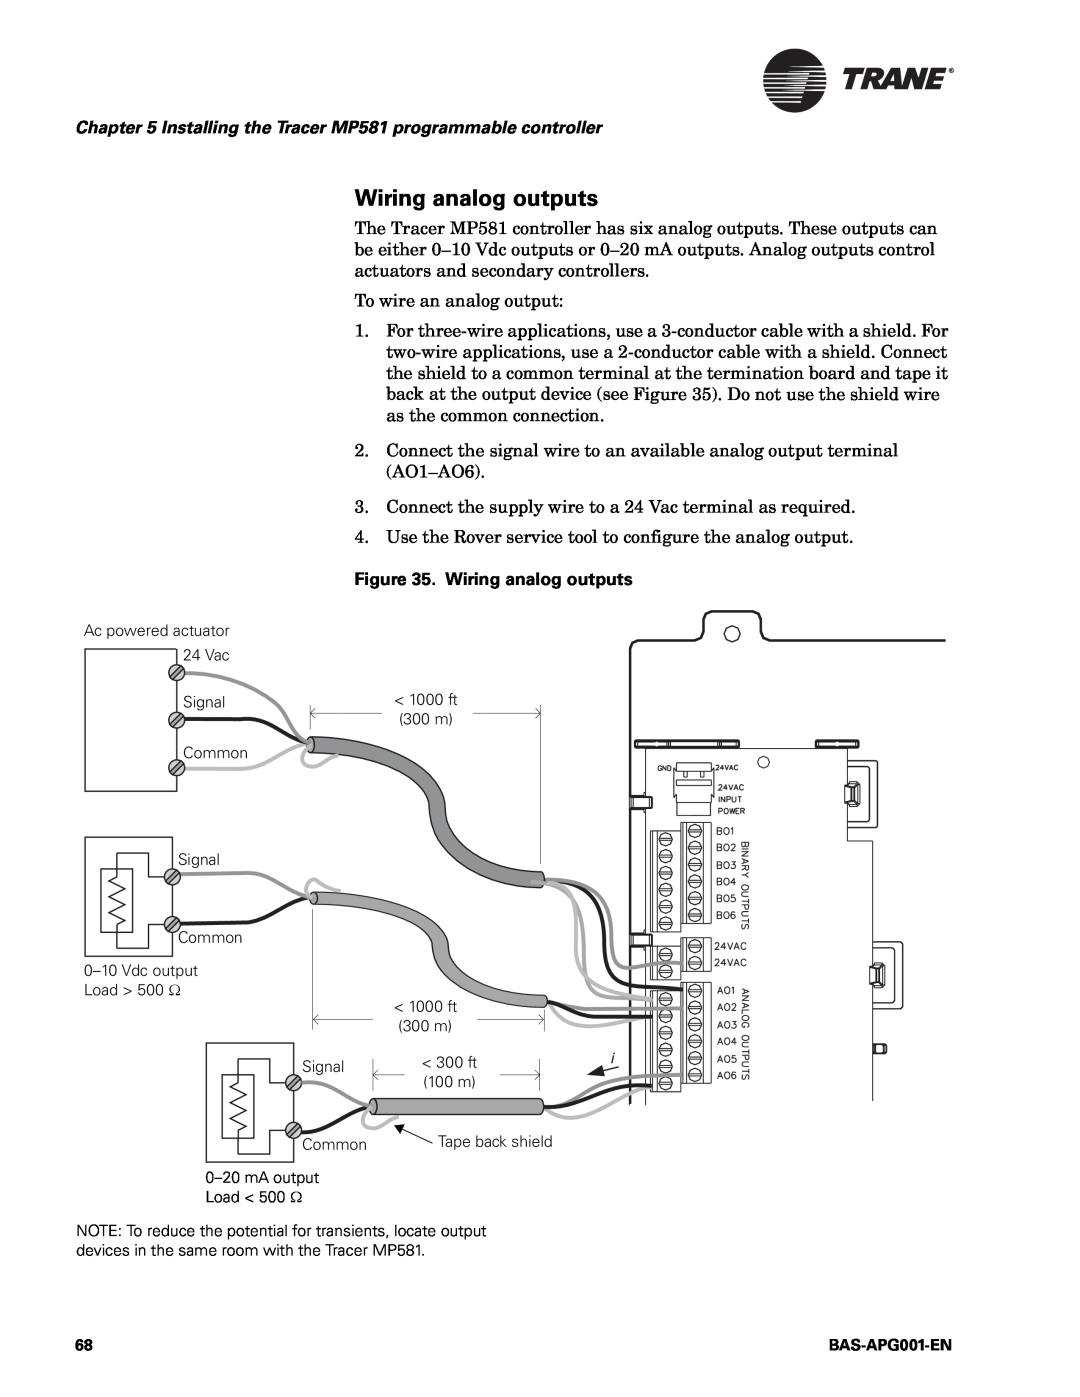 Trane BAS-APG001-EN, Engineered Smoke Control System for Tracer Summit manual Wiring analog outputs 